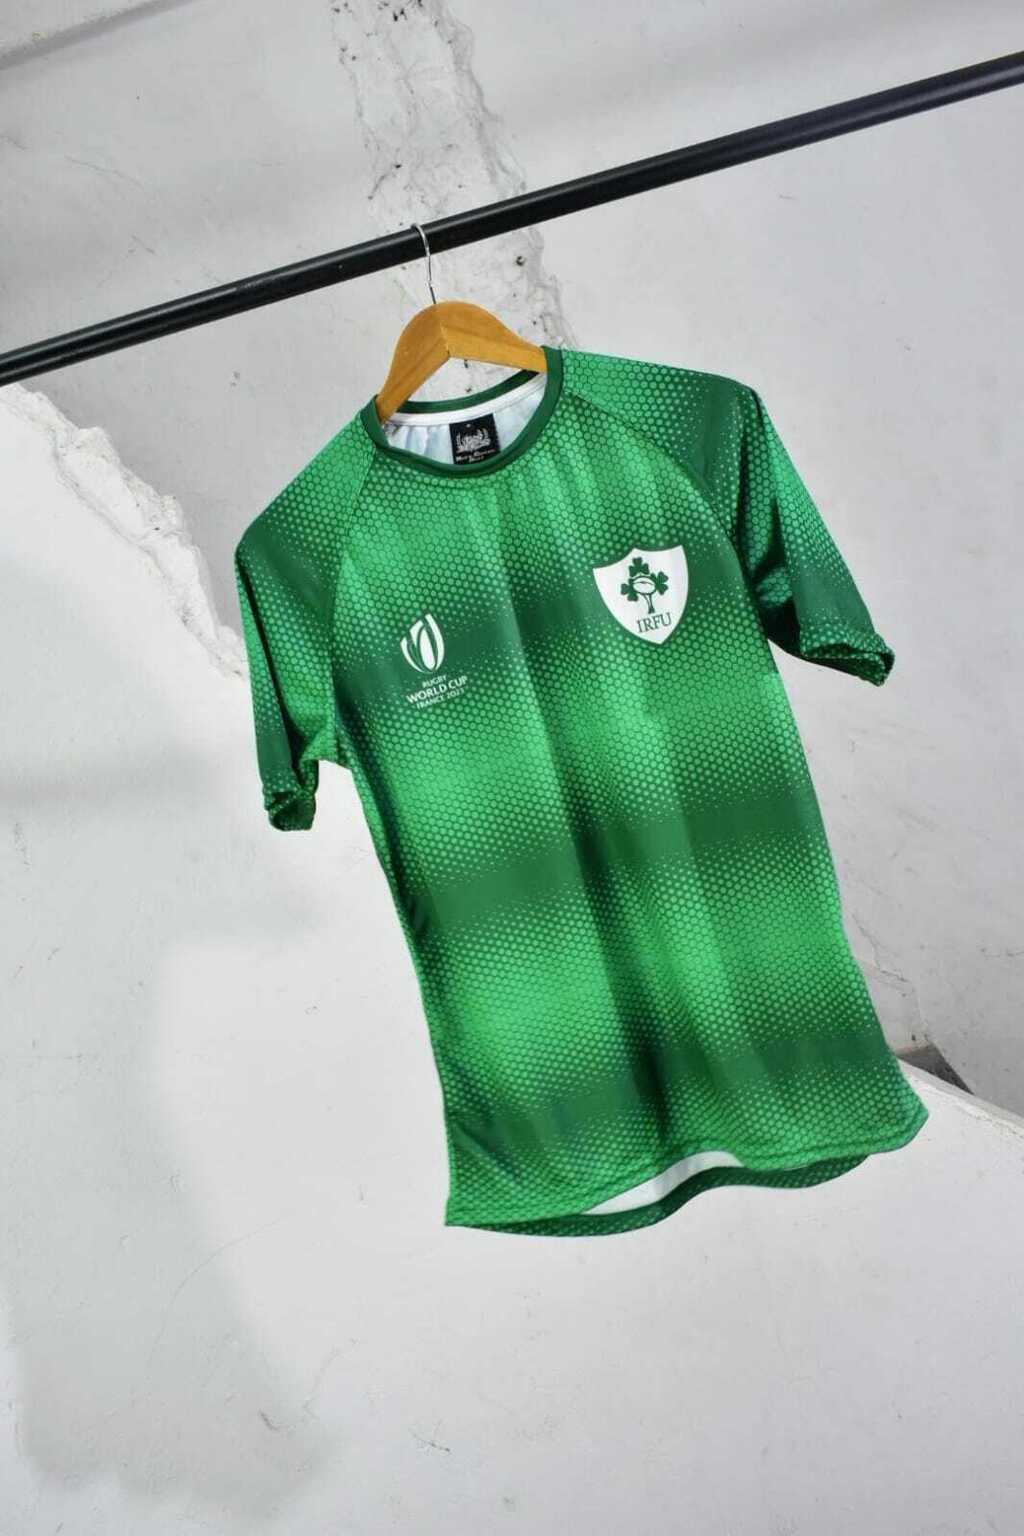 Camiseta Rugby Selección Irlanda 2023 - Nicodeportes